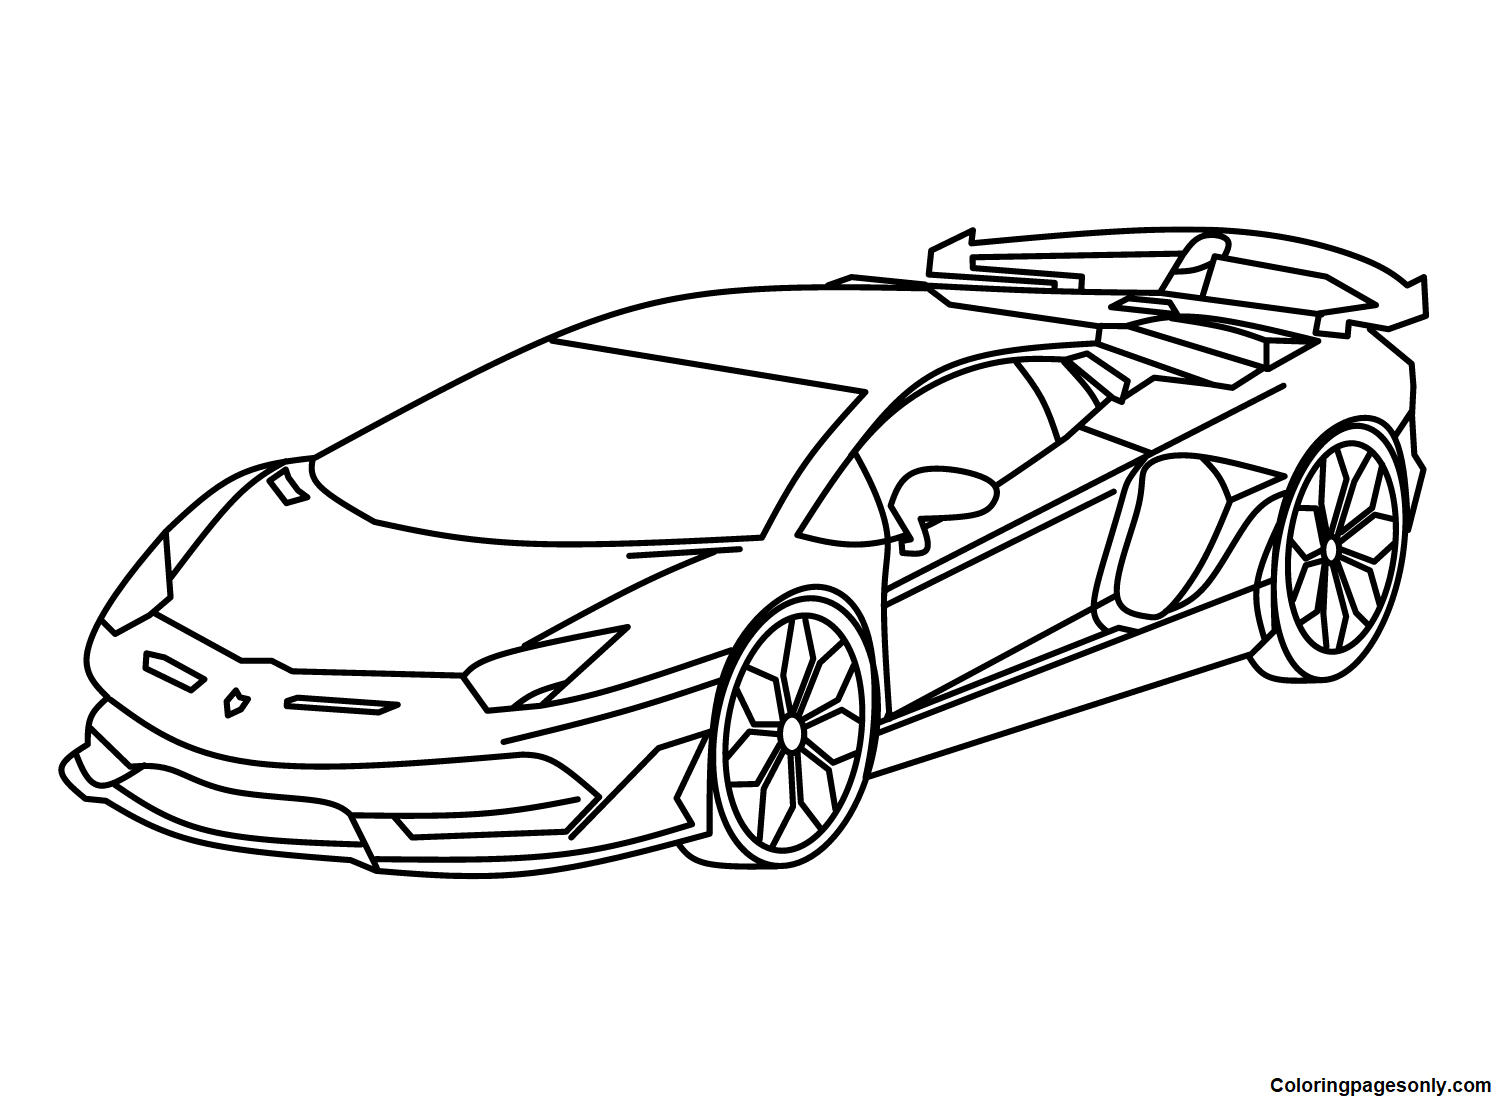 Lamborghini para imprimir Coloring Pages - Lamborghini Coloring Pages -  Coloring Pages For Kids And Adults